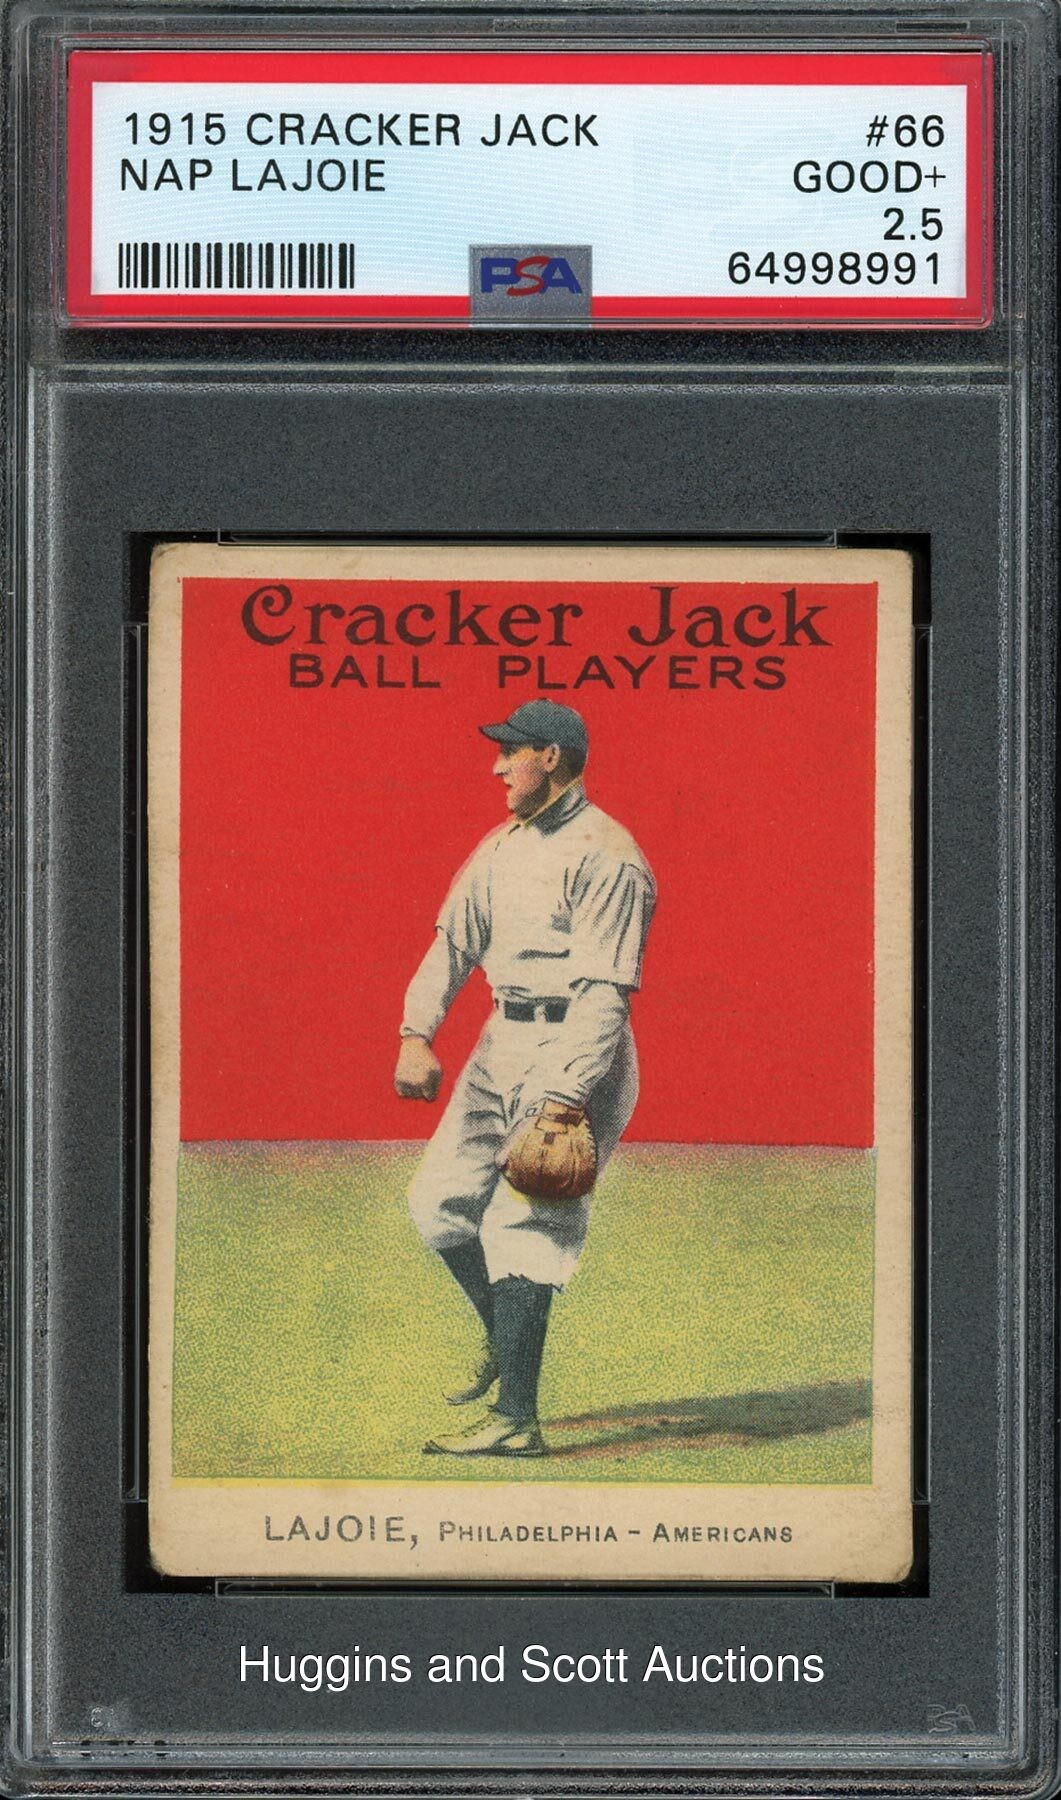 1915 Cracker Jack Ball Players #66 Nap Lajoie - PSA Good+ 2.5